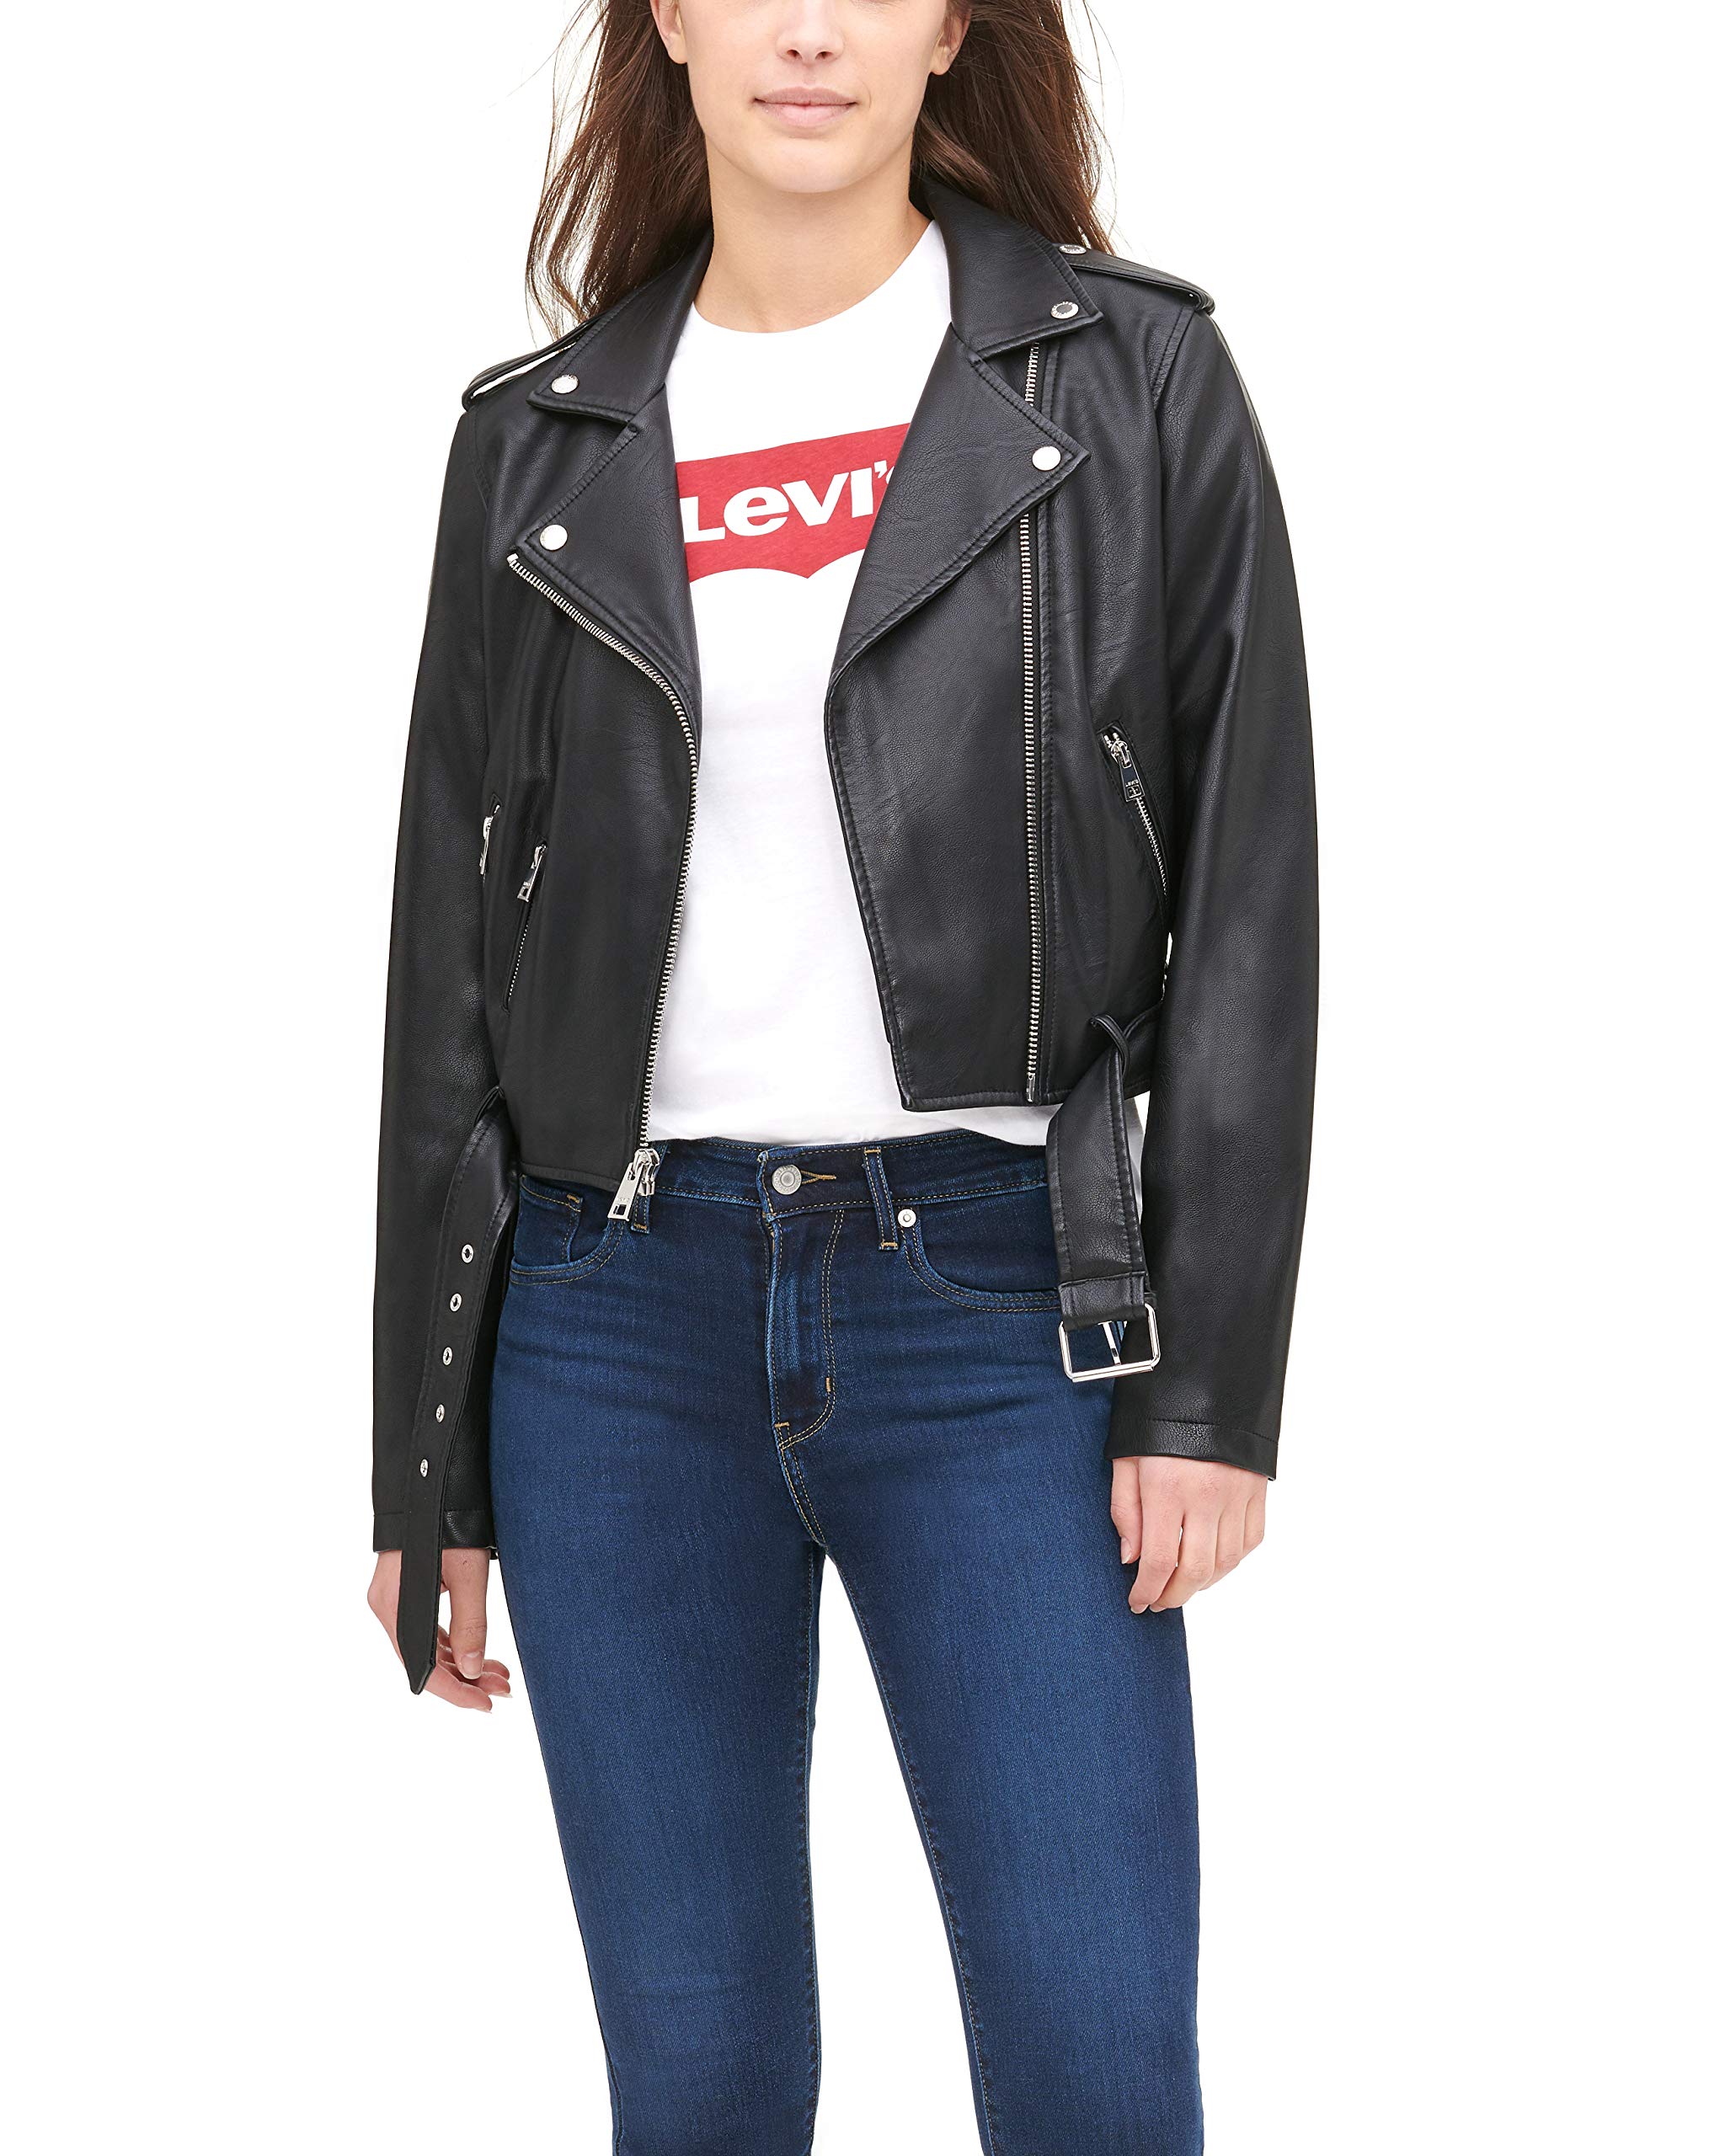 Introducir 45+ imagen levi’s leather jacket womens